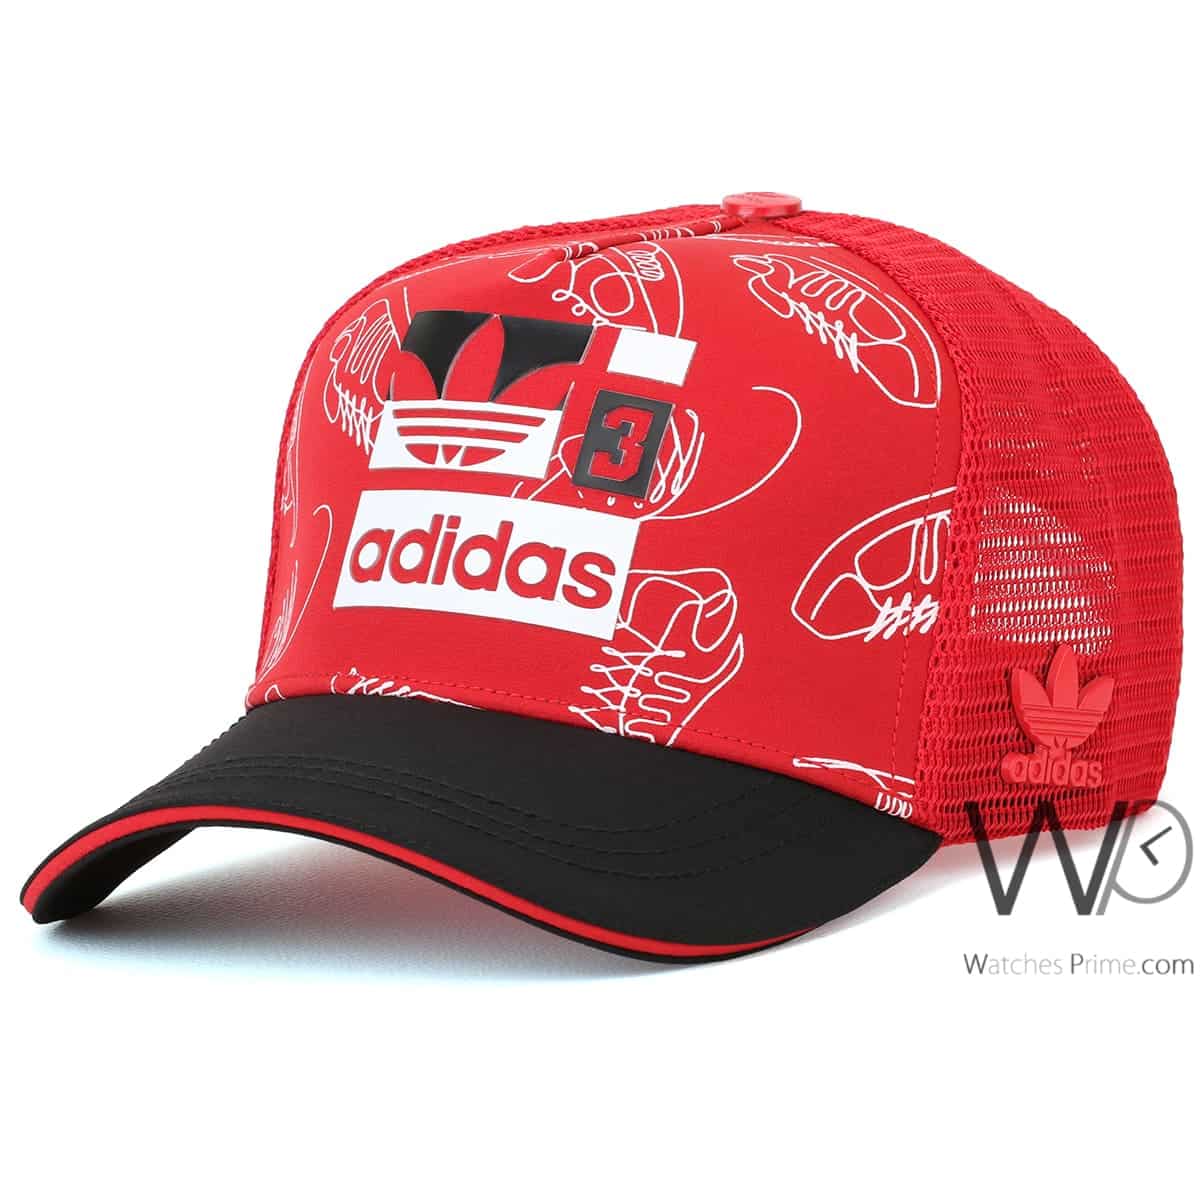 adidas-trucker-red-cap-mesh-men-hat